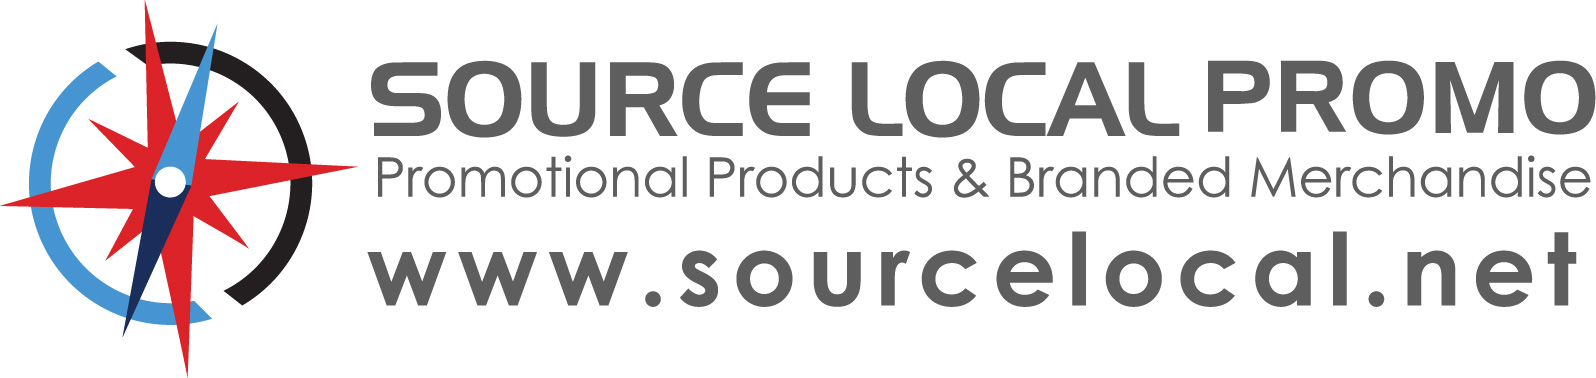 Source Local, Inc.'s Logo